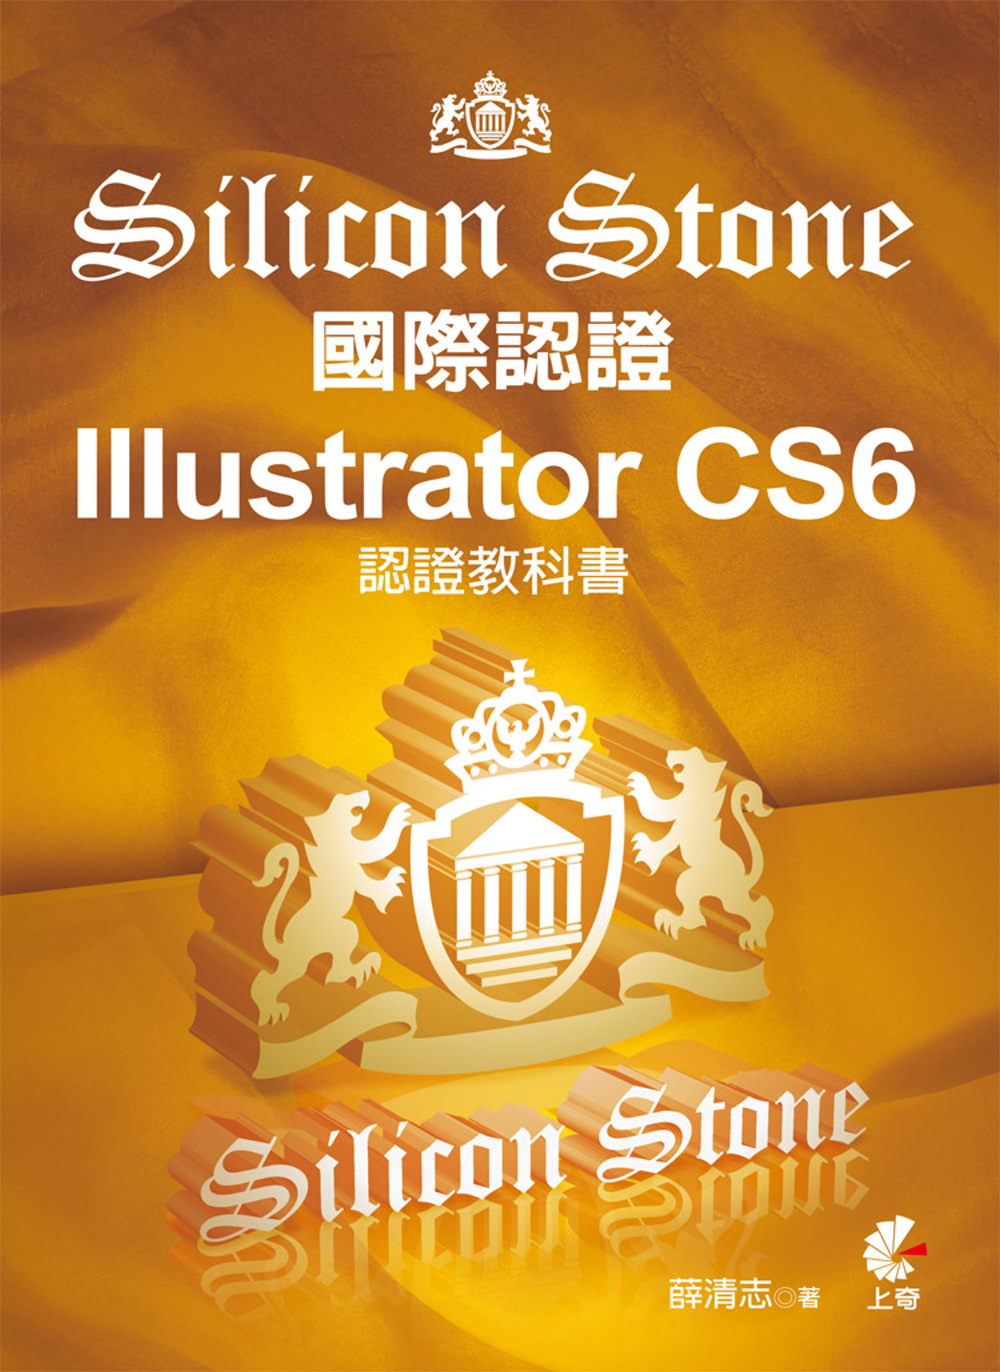 Illustrator CS6 Silicon Stone ...